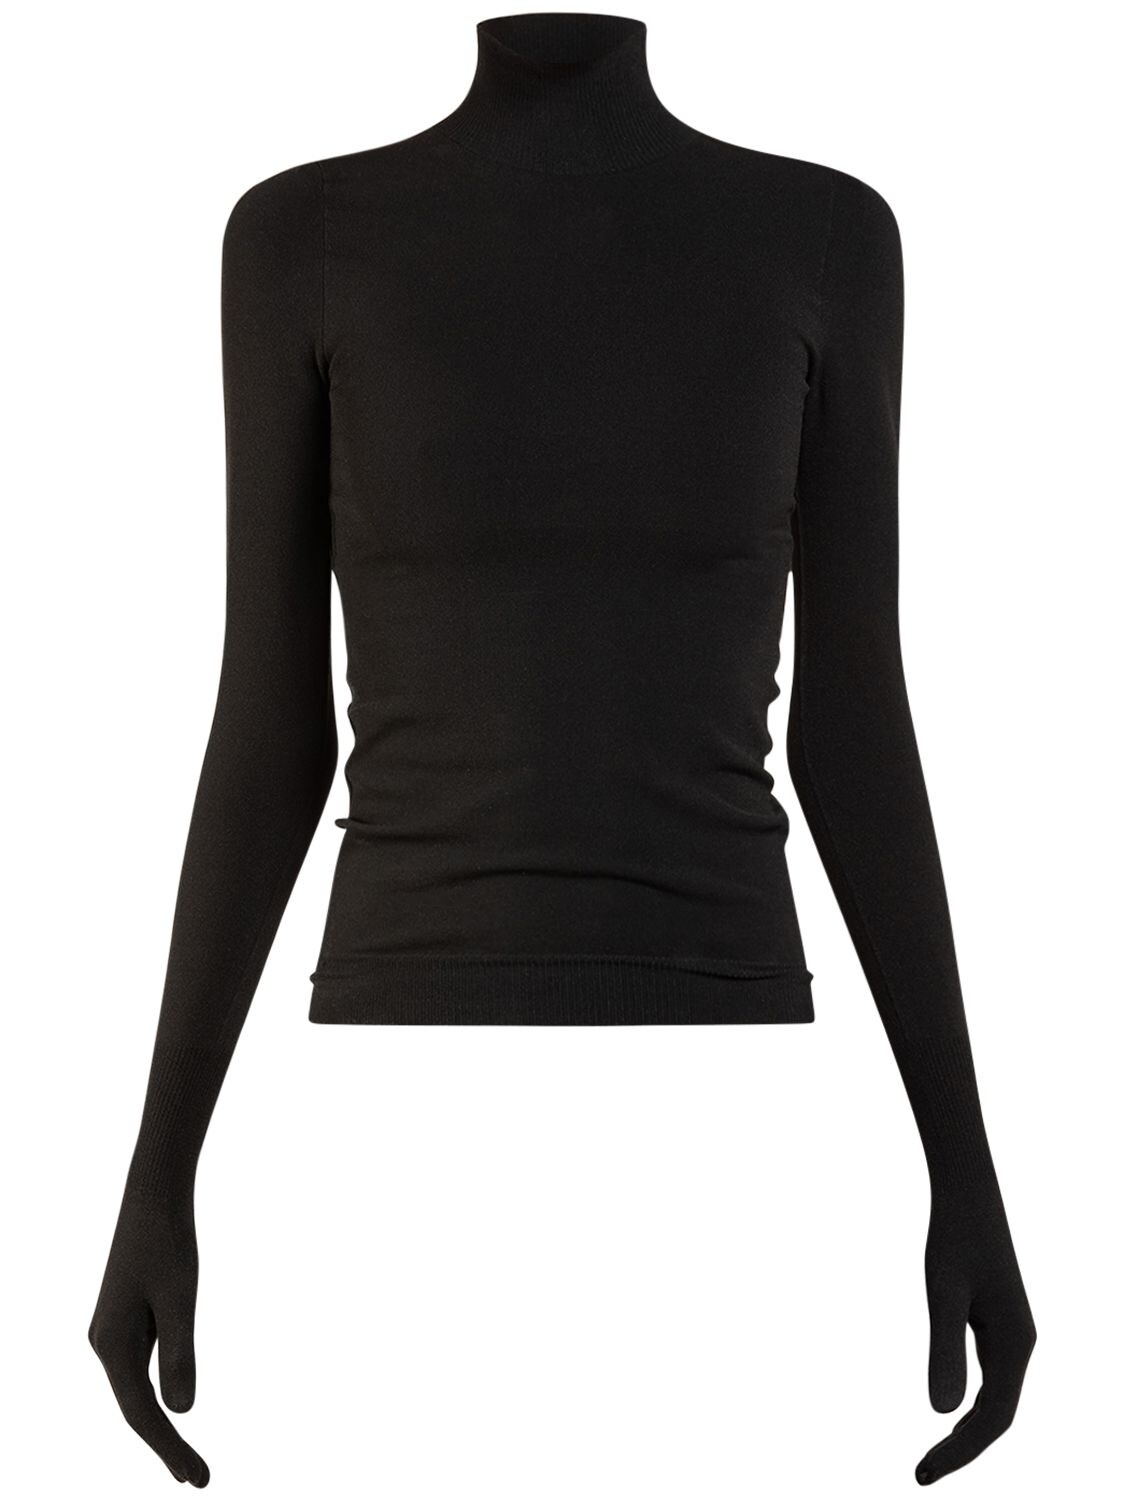 Balenciaga Branded-waistband Stretch-cotton Boxers In Black